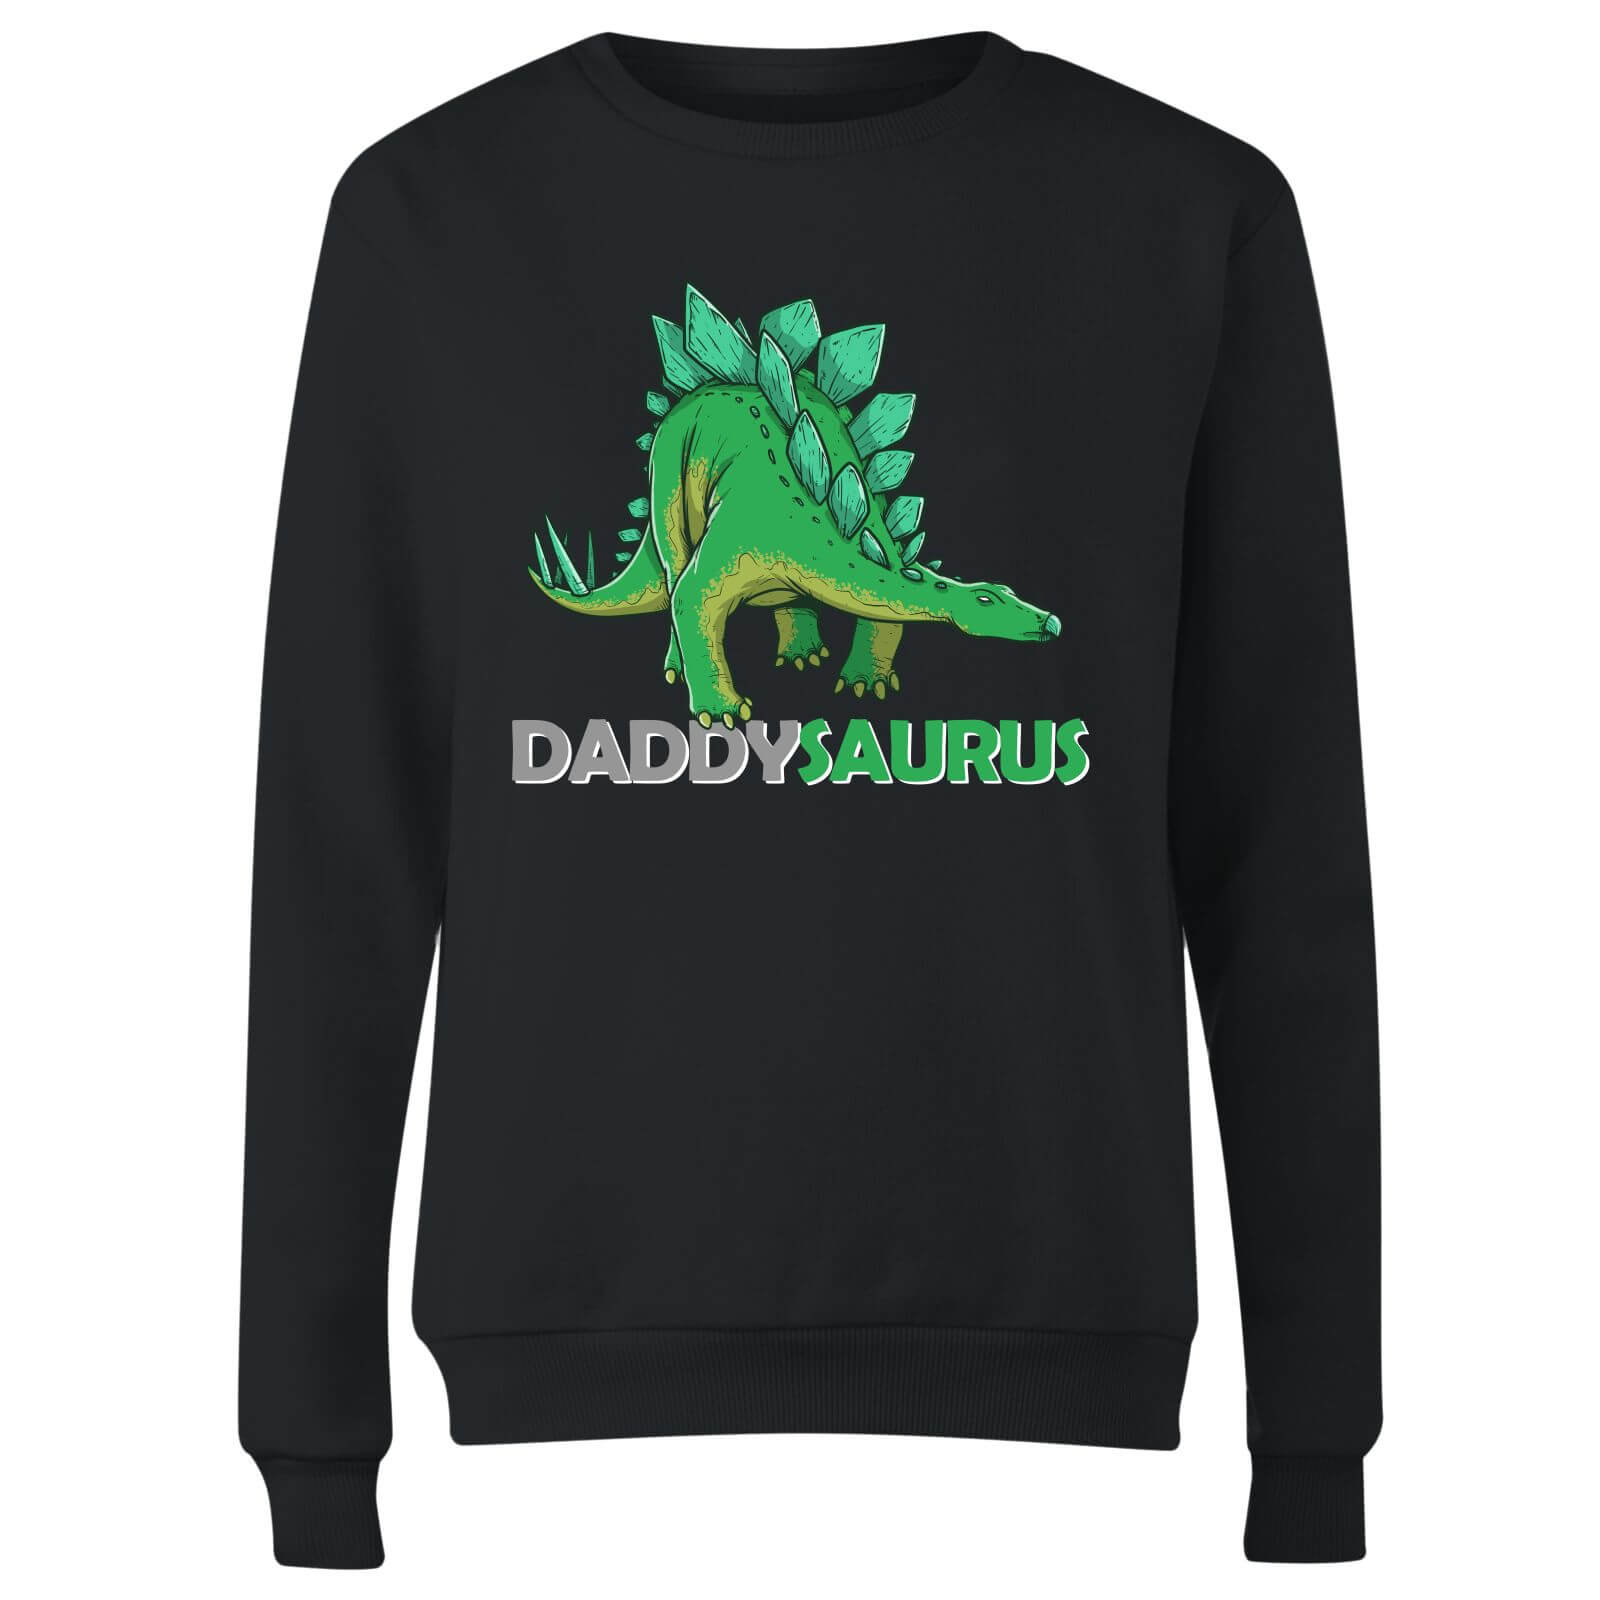 By Iwoot Daddysaurus women's sweatshirt - black - 5xl - black